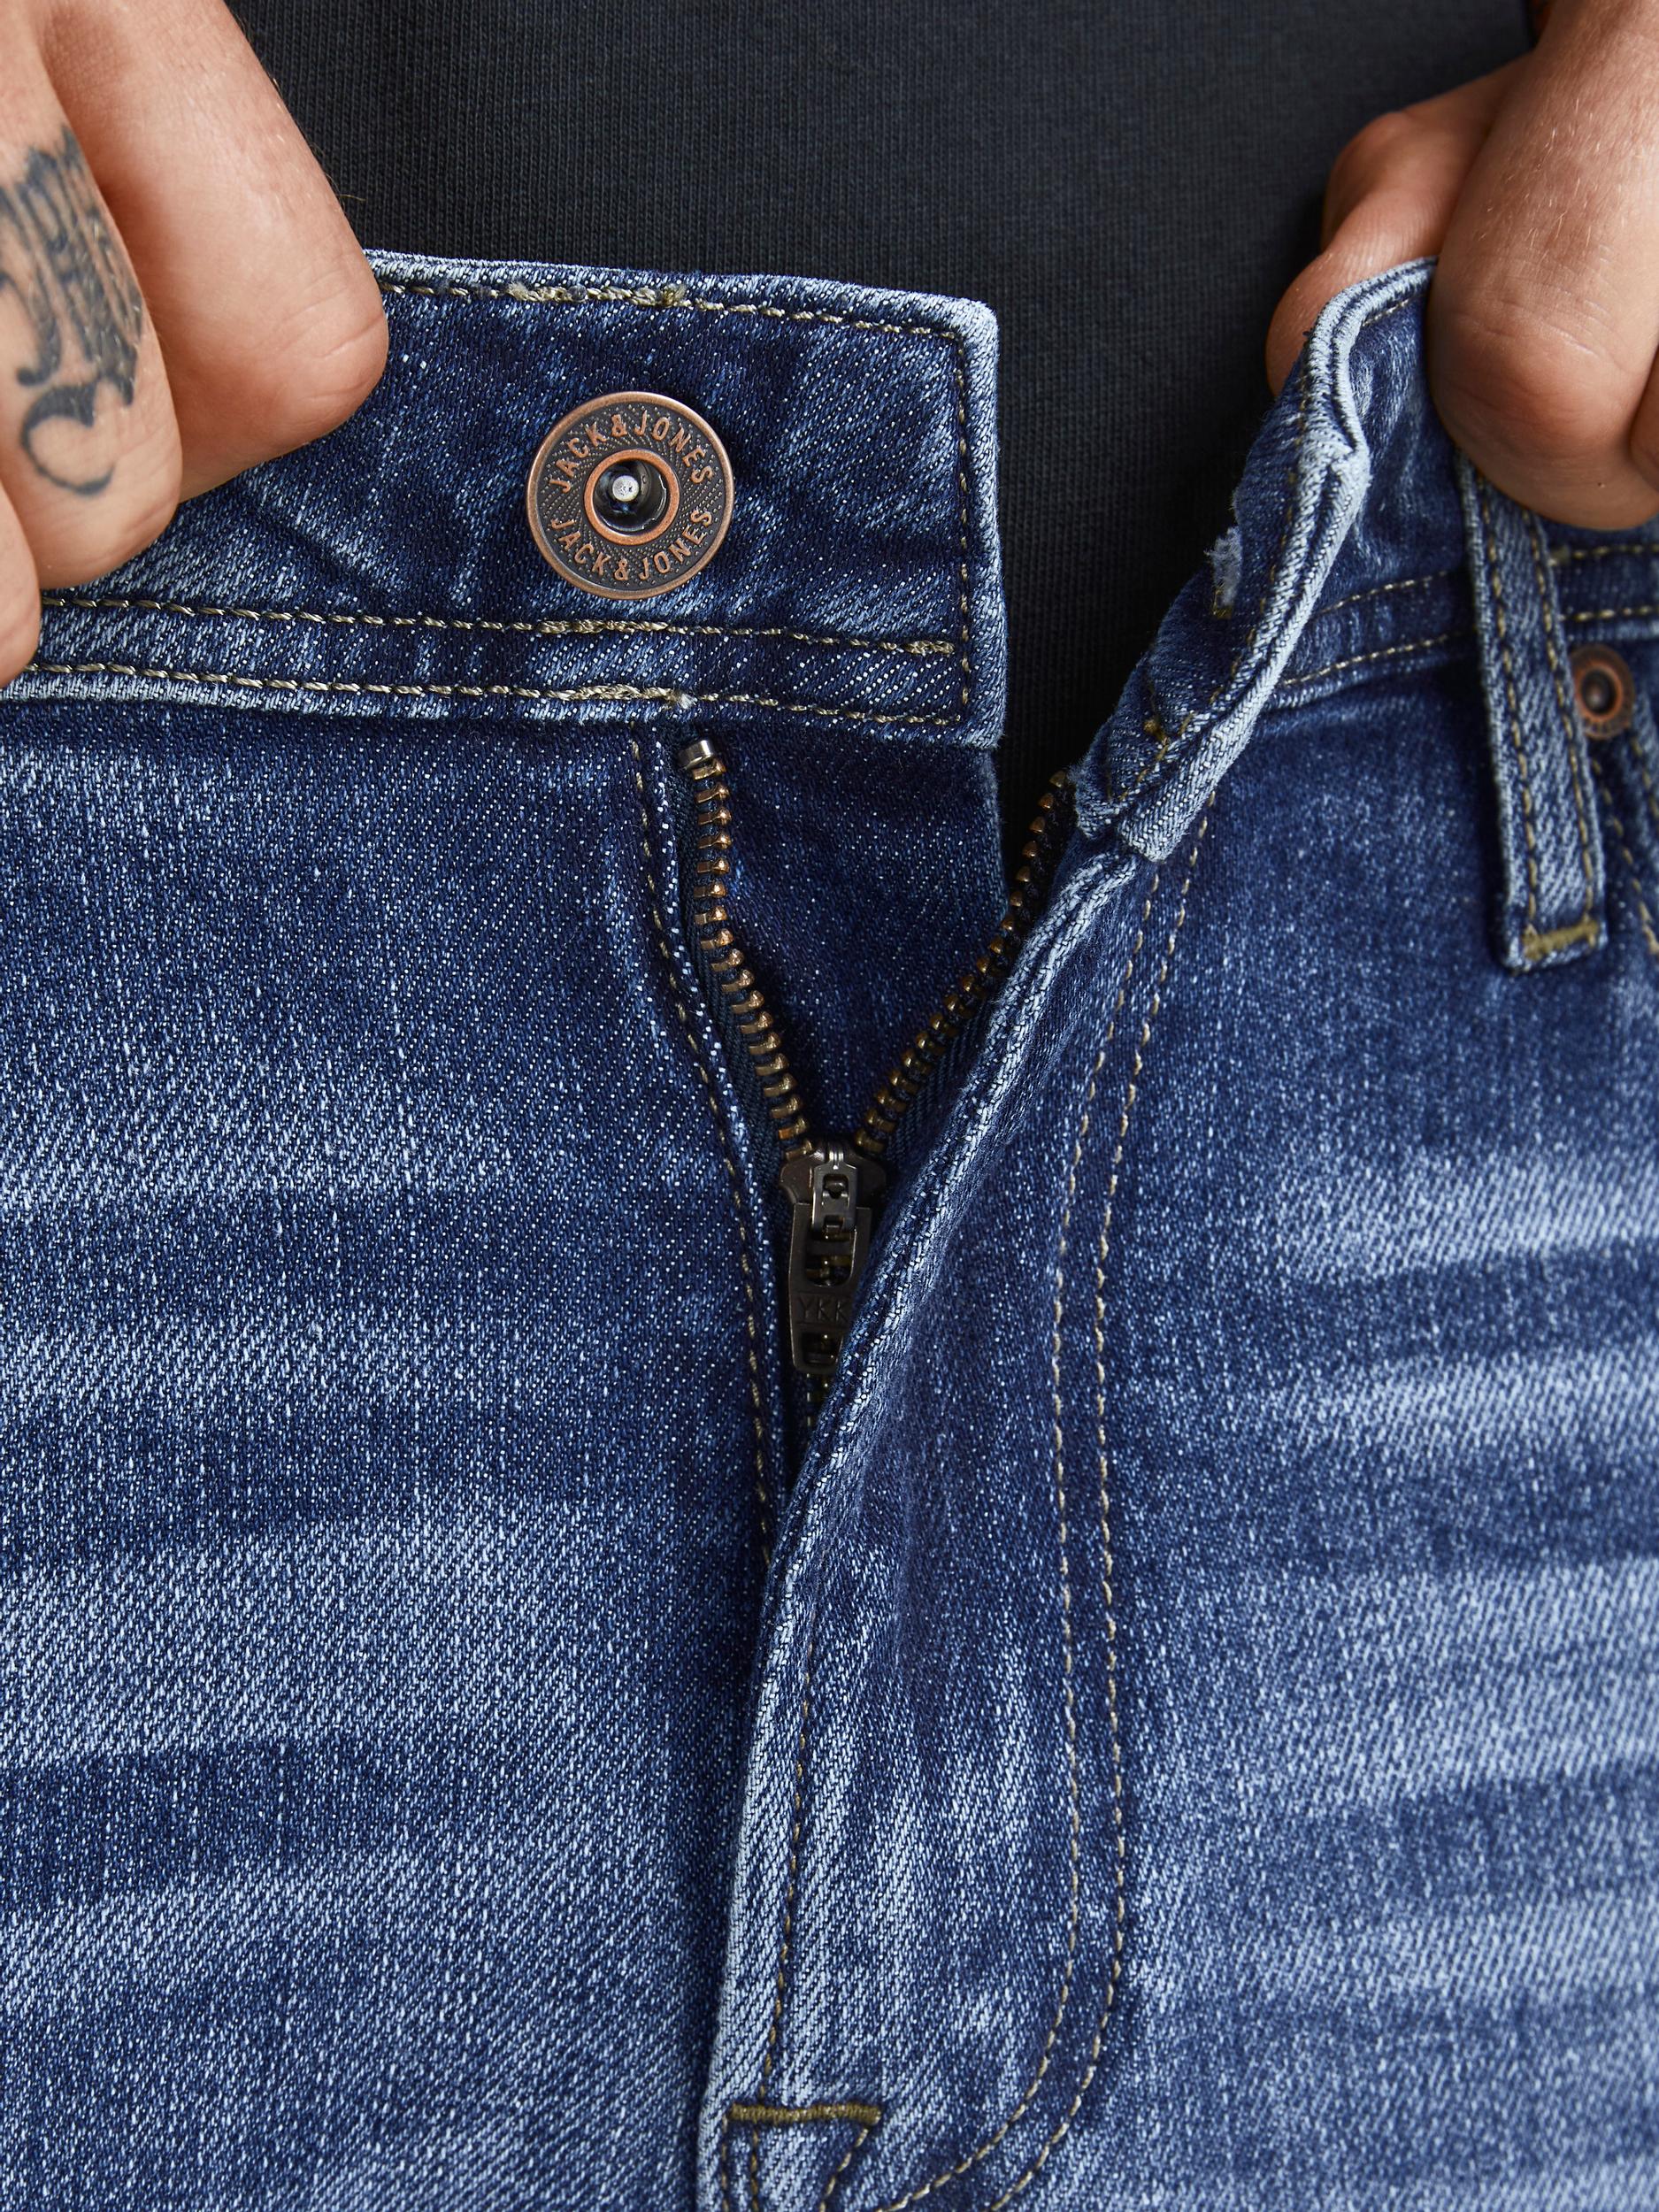 Jack & Jones Clark jeans, blue denim, 36/32